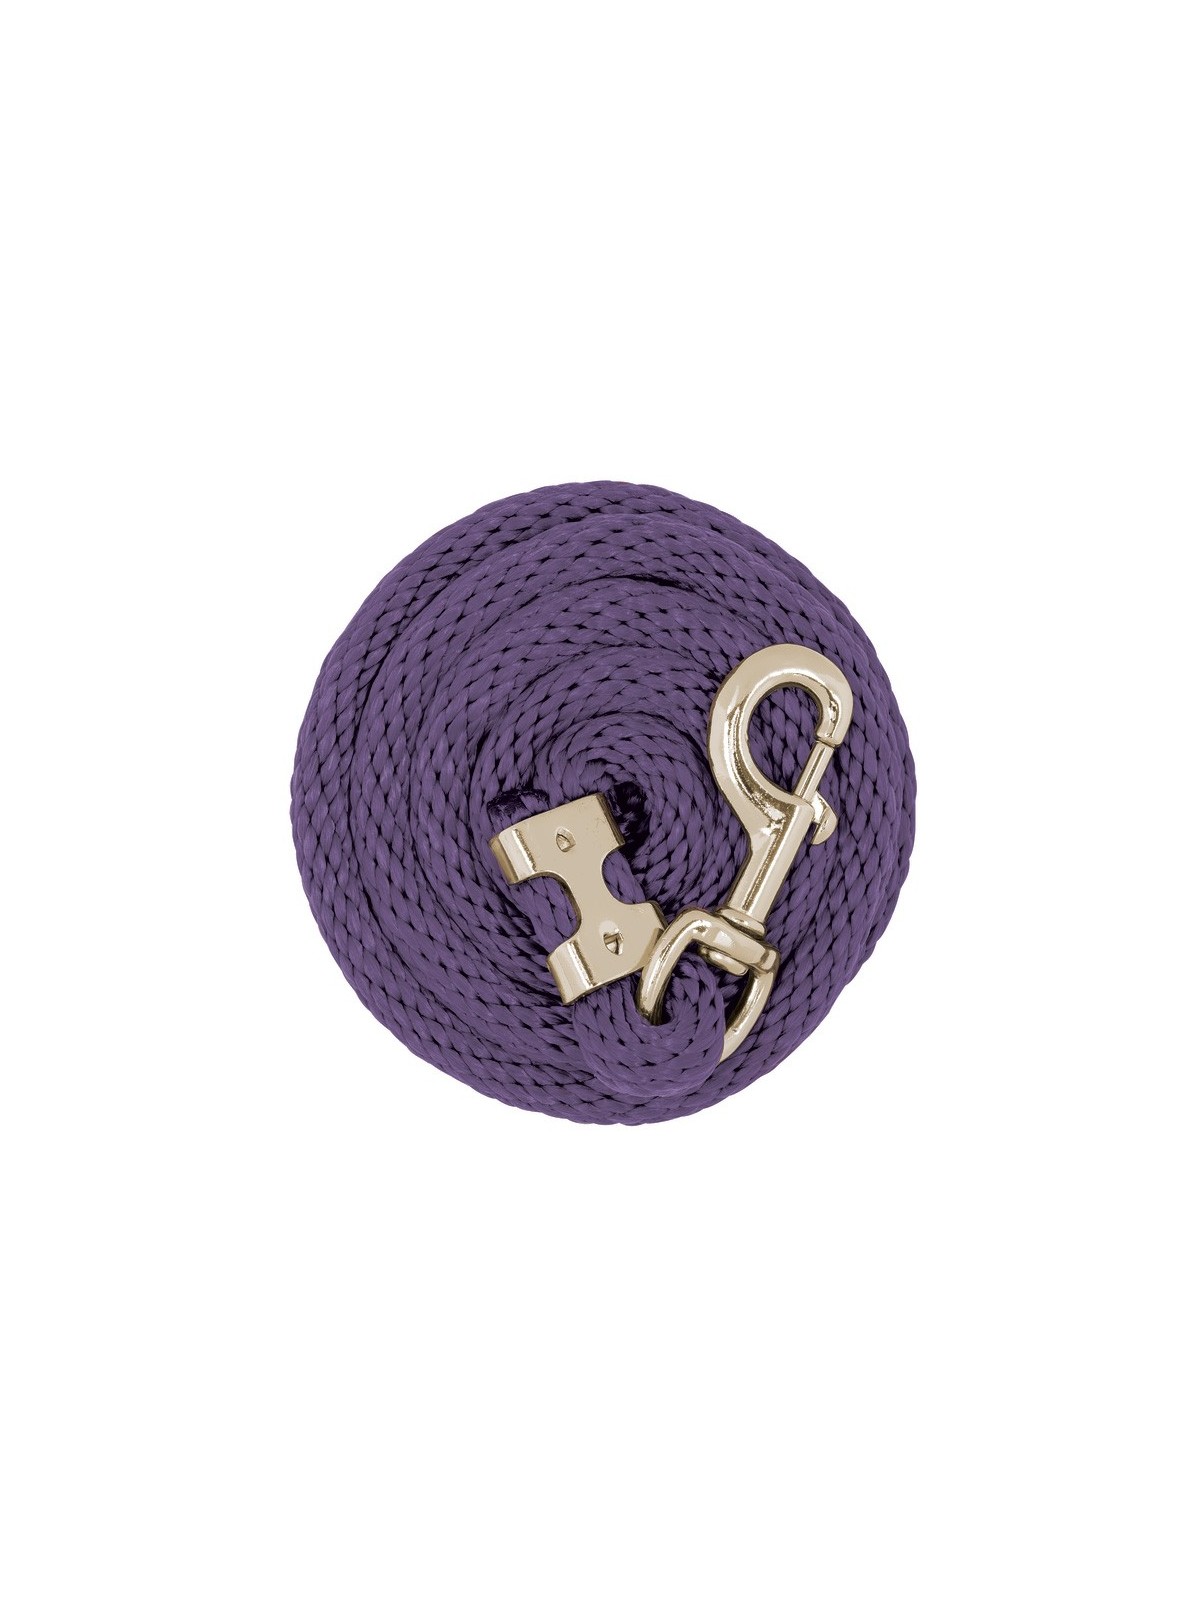 Poly Lead Rope 8' purple